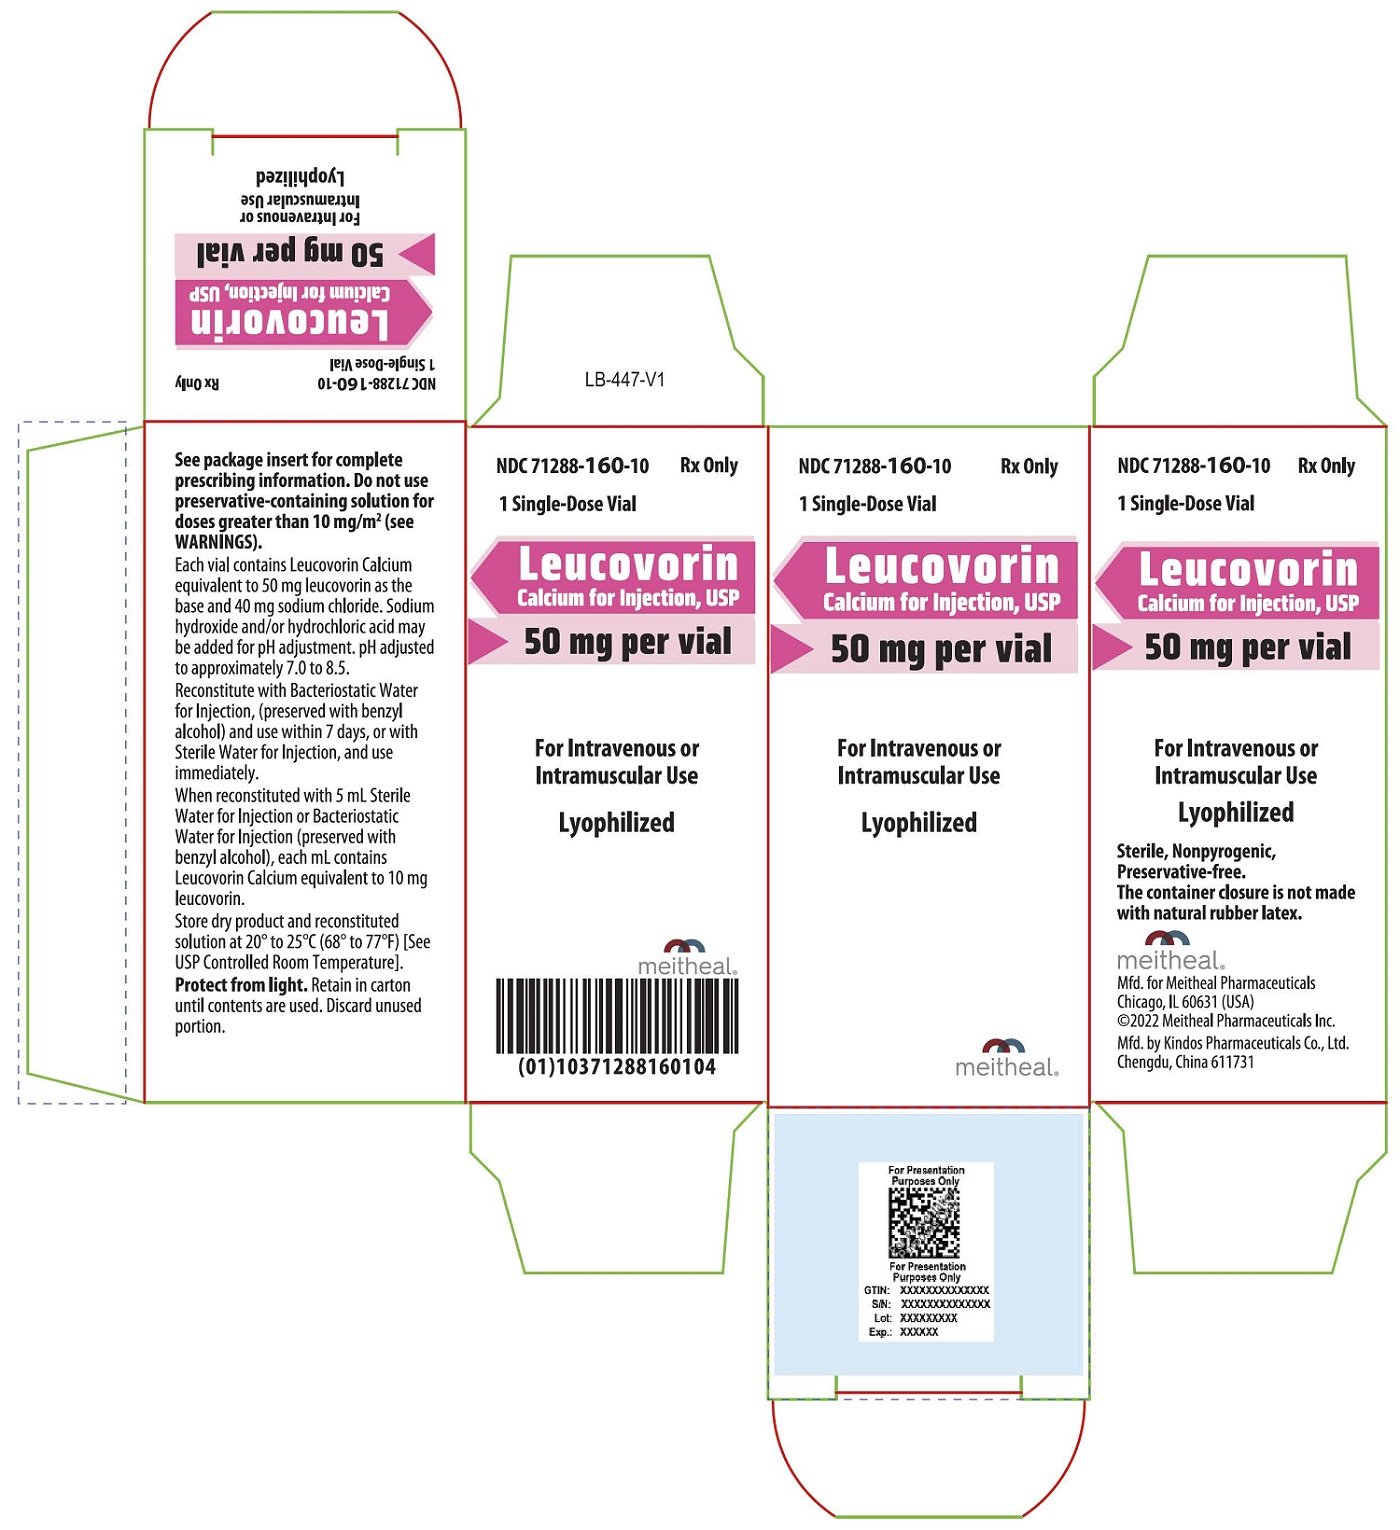 PRINCIPAL DISPLAY PANEL – Leucovorin Calcium for Injection, USP 50 mg Carton